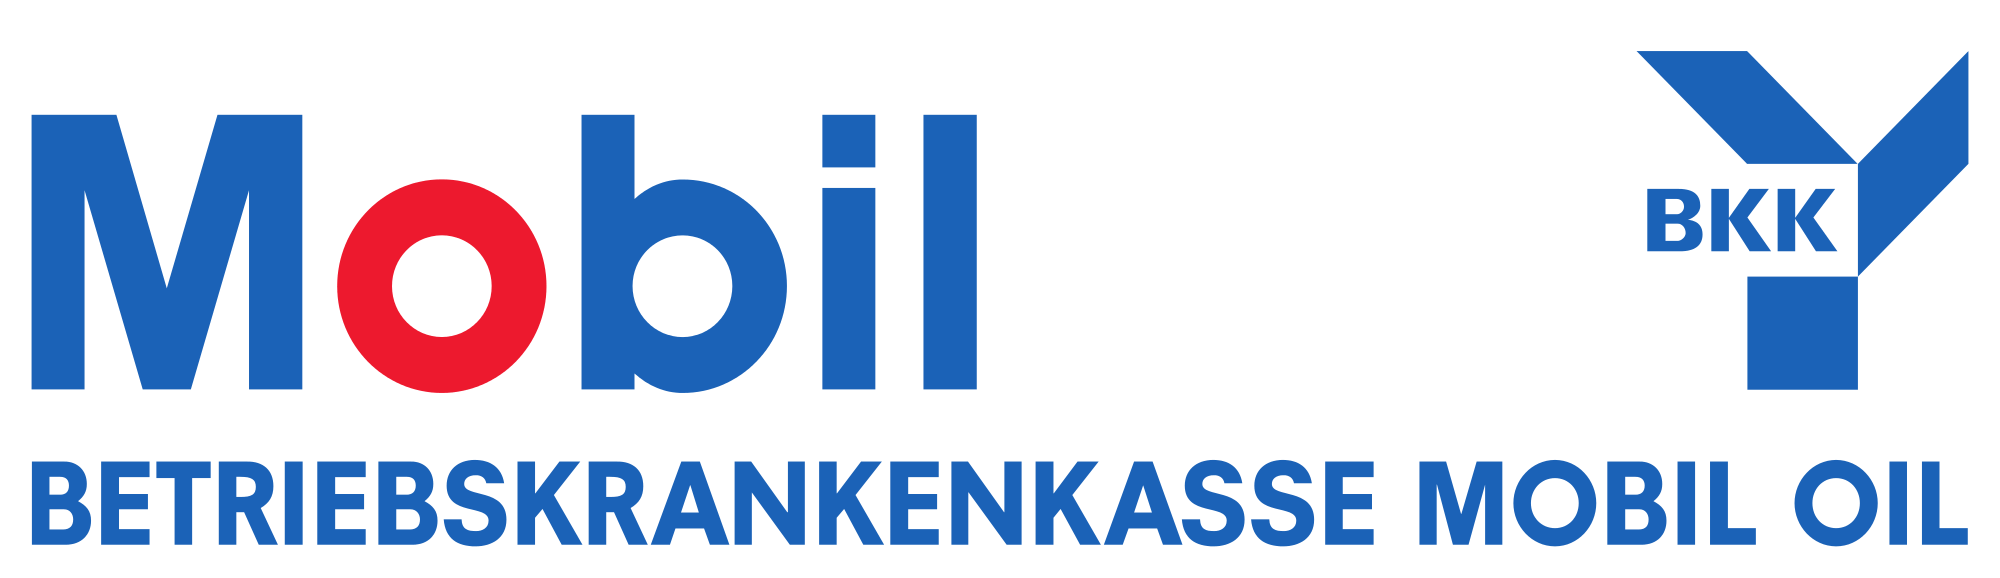 Mobil Oil Logo - File:BKK Mobil Oil logo.svg - Wikimedia Commons